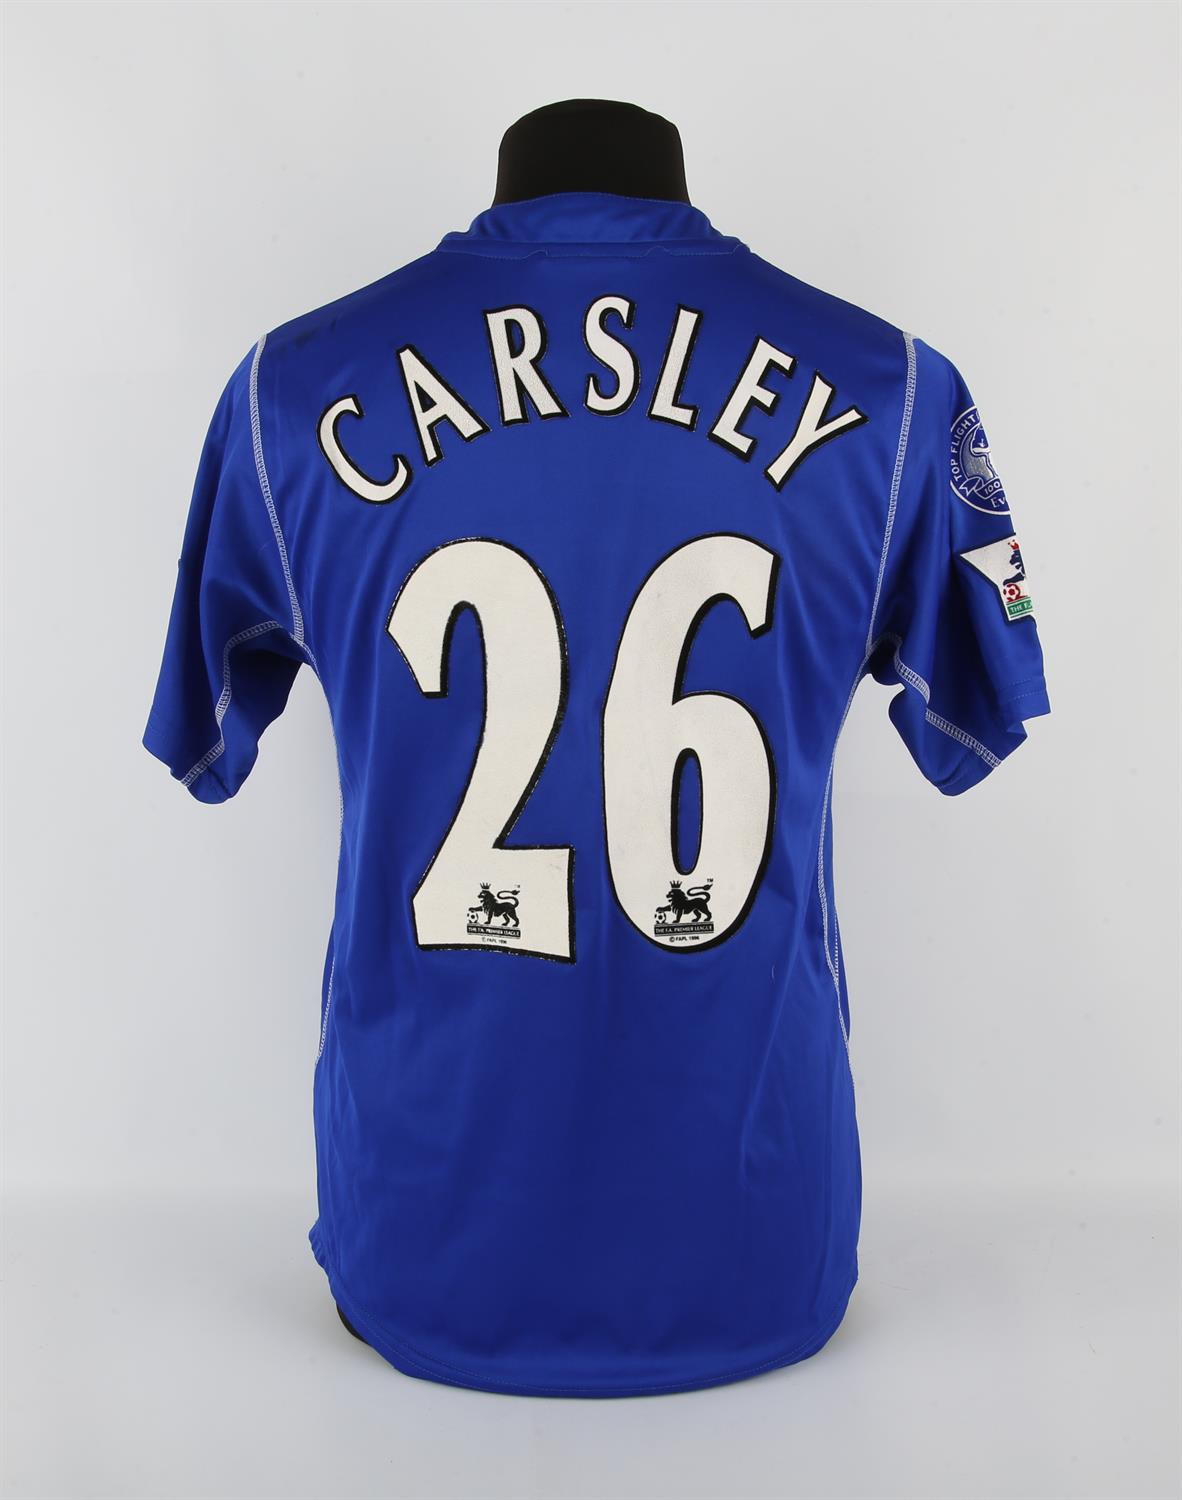 Everton Football Club Carsley (No.26) 2002 - 2003 shirt. Match worn. Provenance kitman.